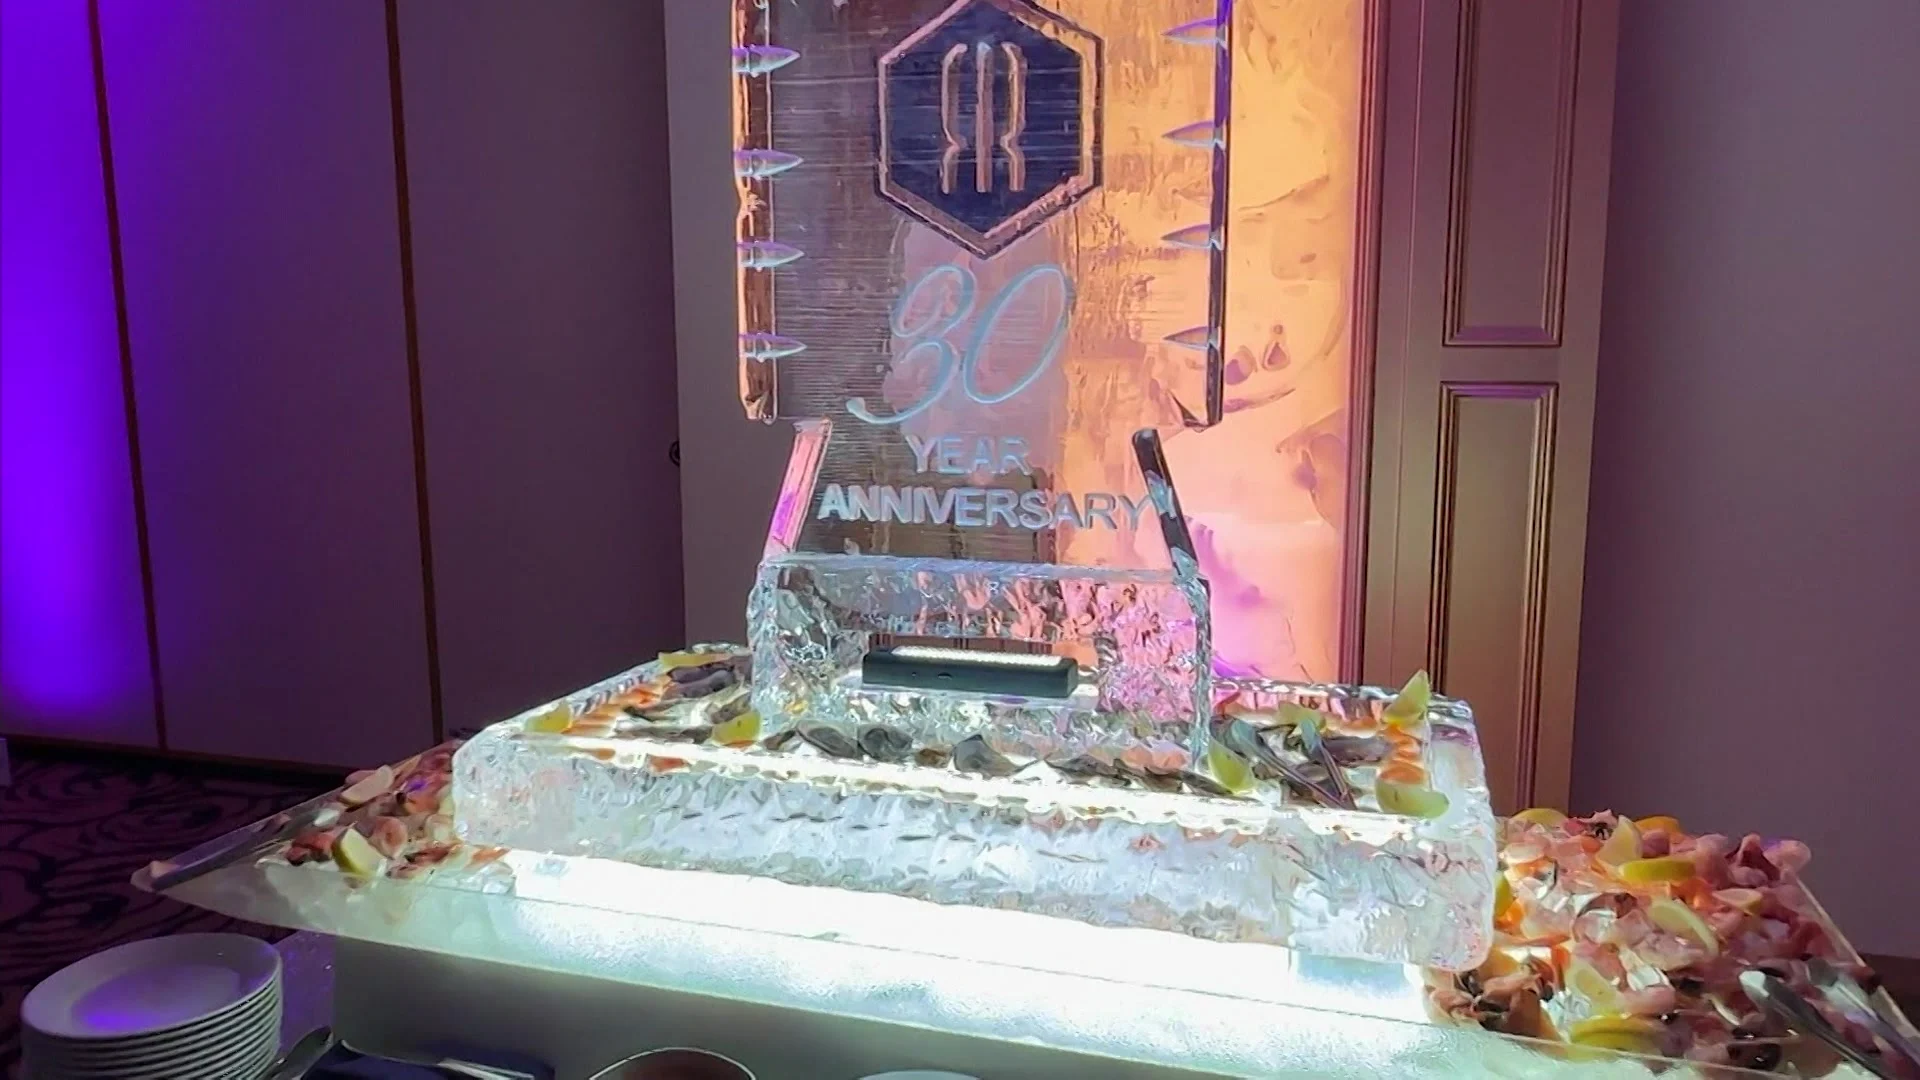 Royal Regency Hotel in Yonkers Marks 30 Years of Success